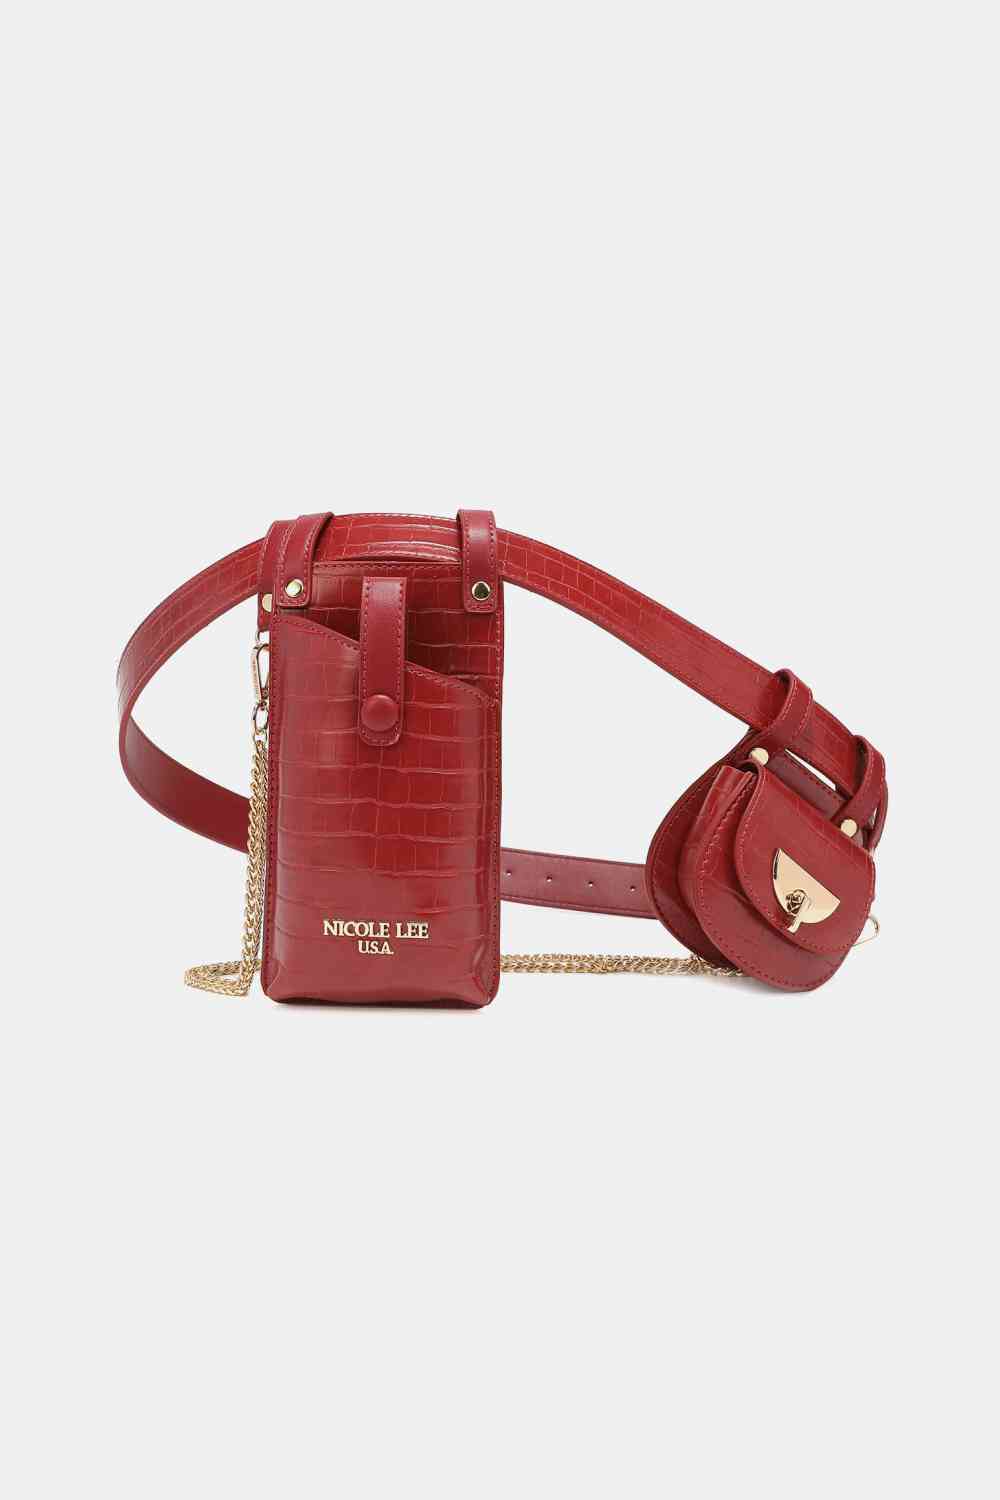 Nicole Lee USA Aurelia Belt Bag Red One Size